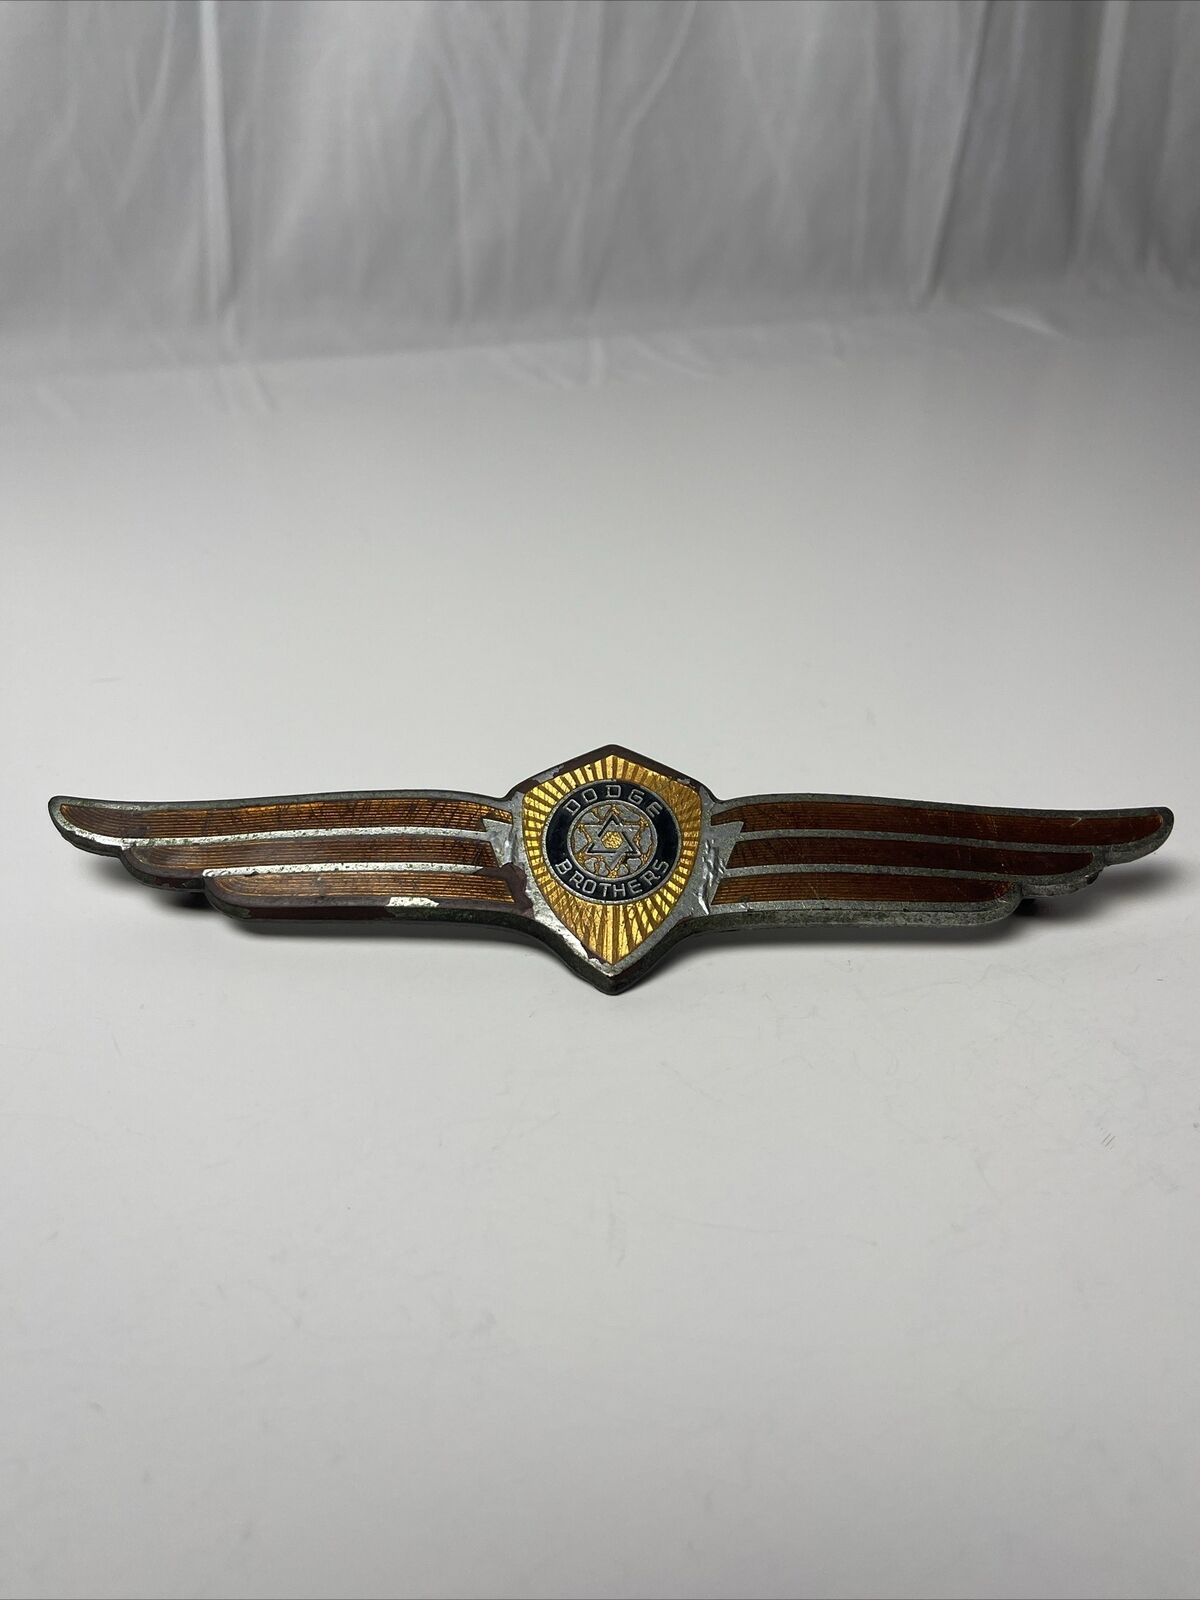 Vintage Dodge Brothers Winged Trunk Emblem Badge Fox Co Cincinnati Made in USA